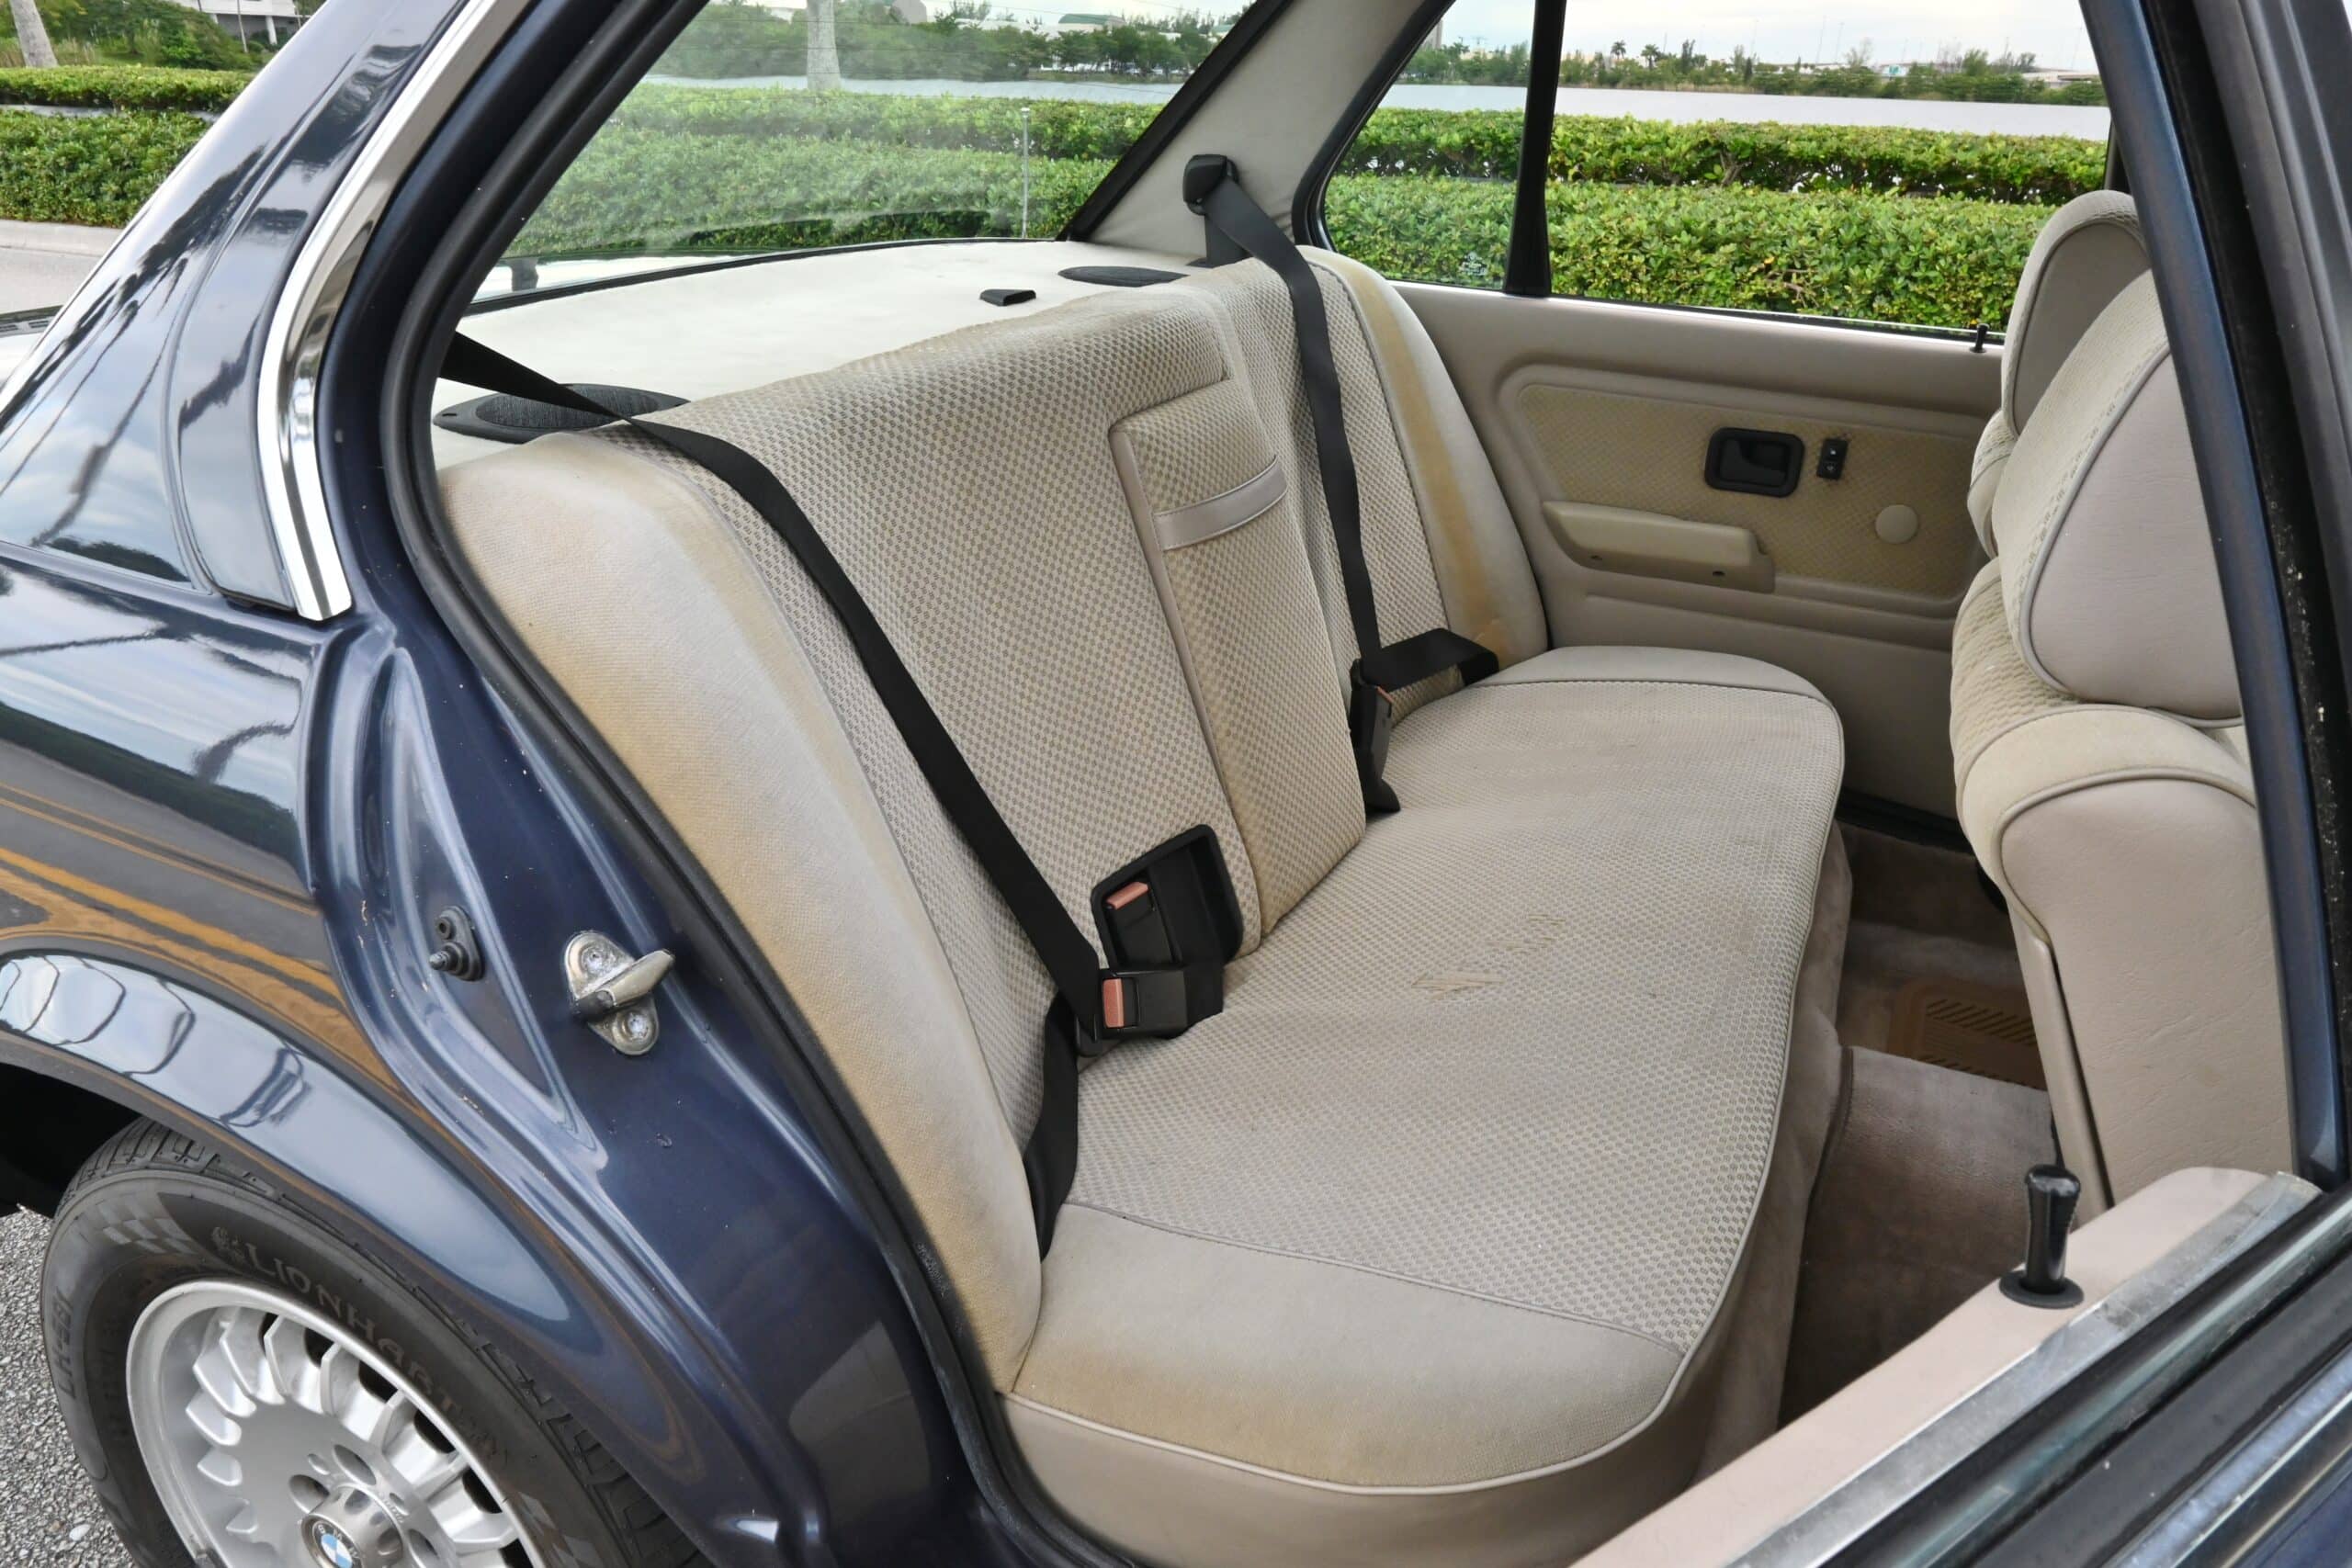 1985 BMW E30-325E – Florida Car – Arctic Blue – 5 Speed – Cloth Seats – Rust Free